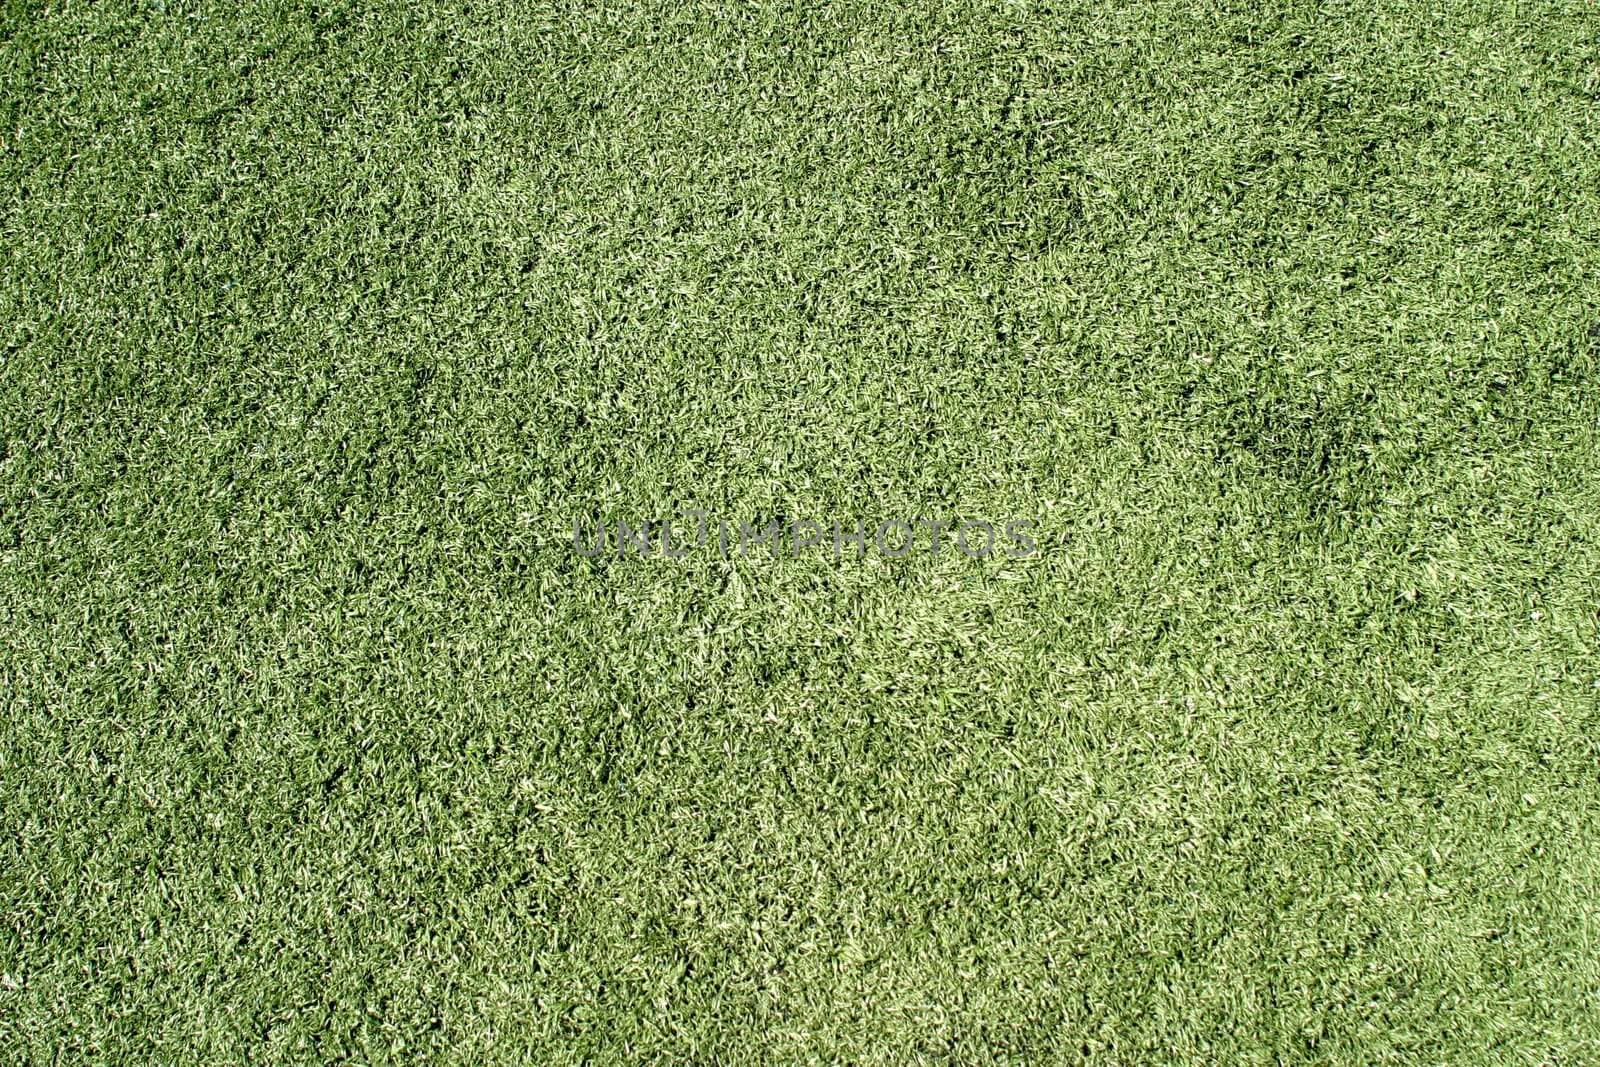 Green Lawn (6478) by hlehnerer